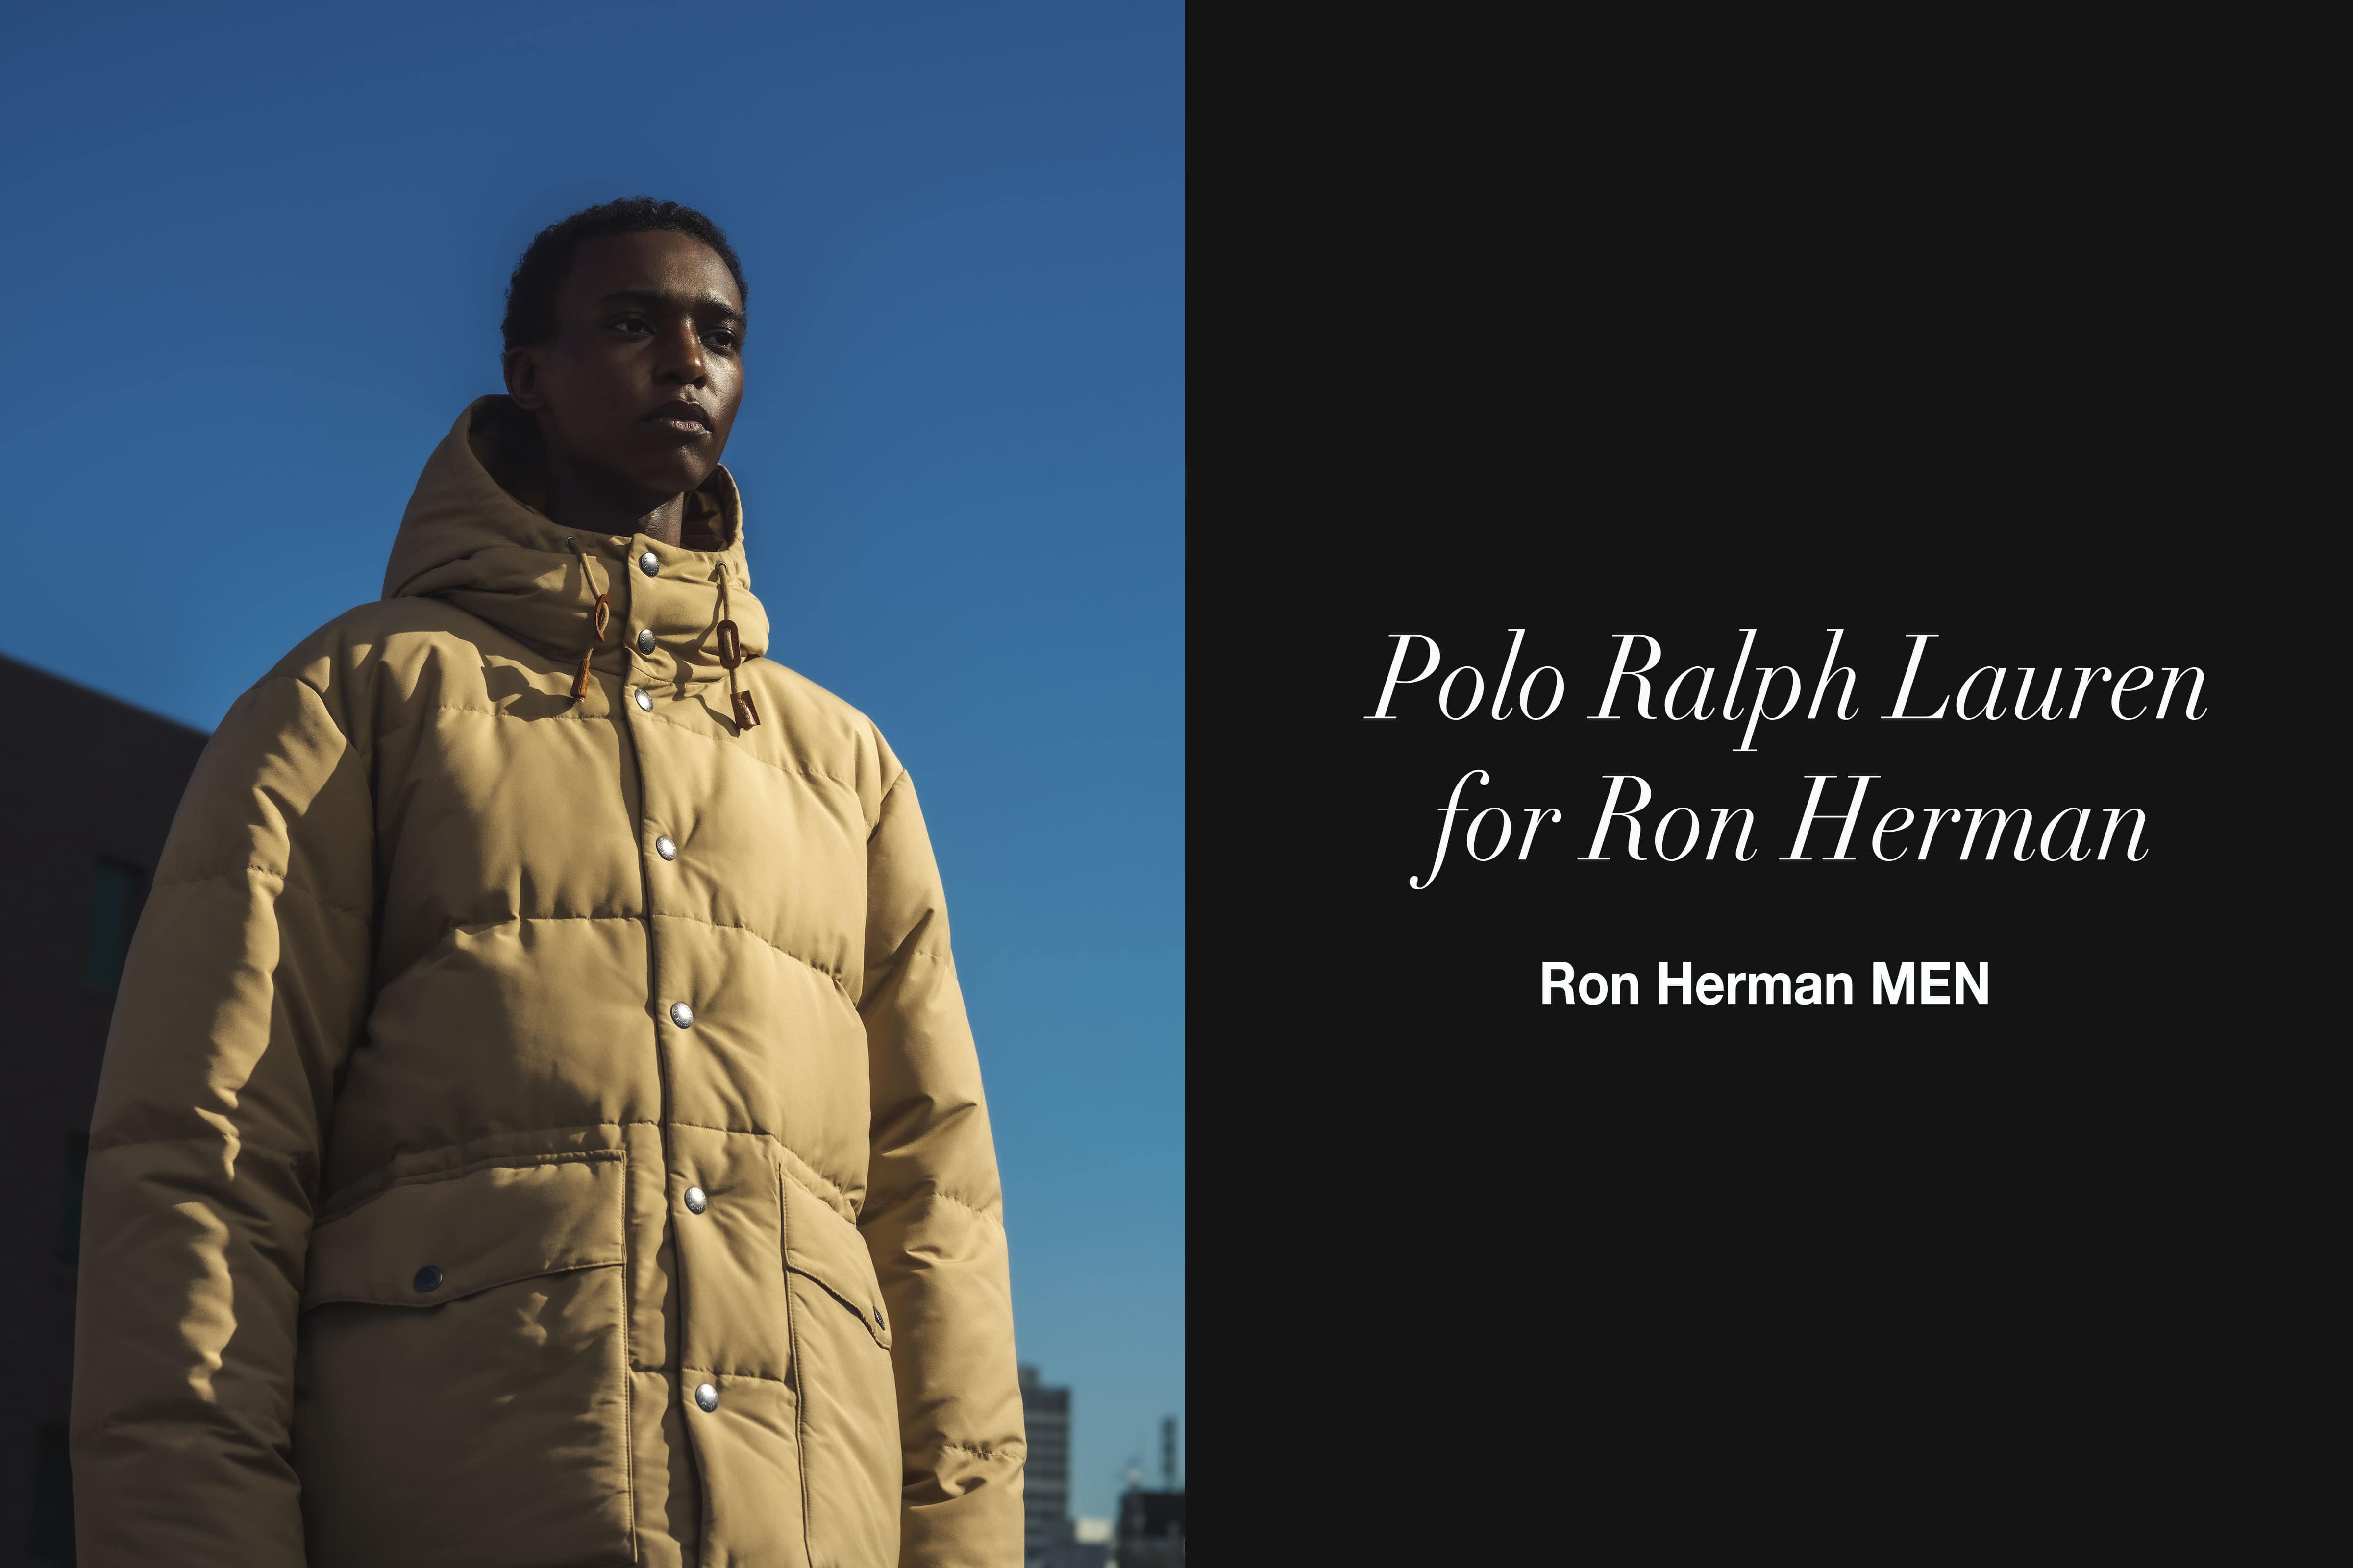 Polo Ralph Lauren for Ron Herman Rainier Jacket 11.18(Sat) New Arrival